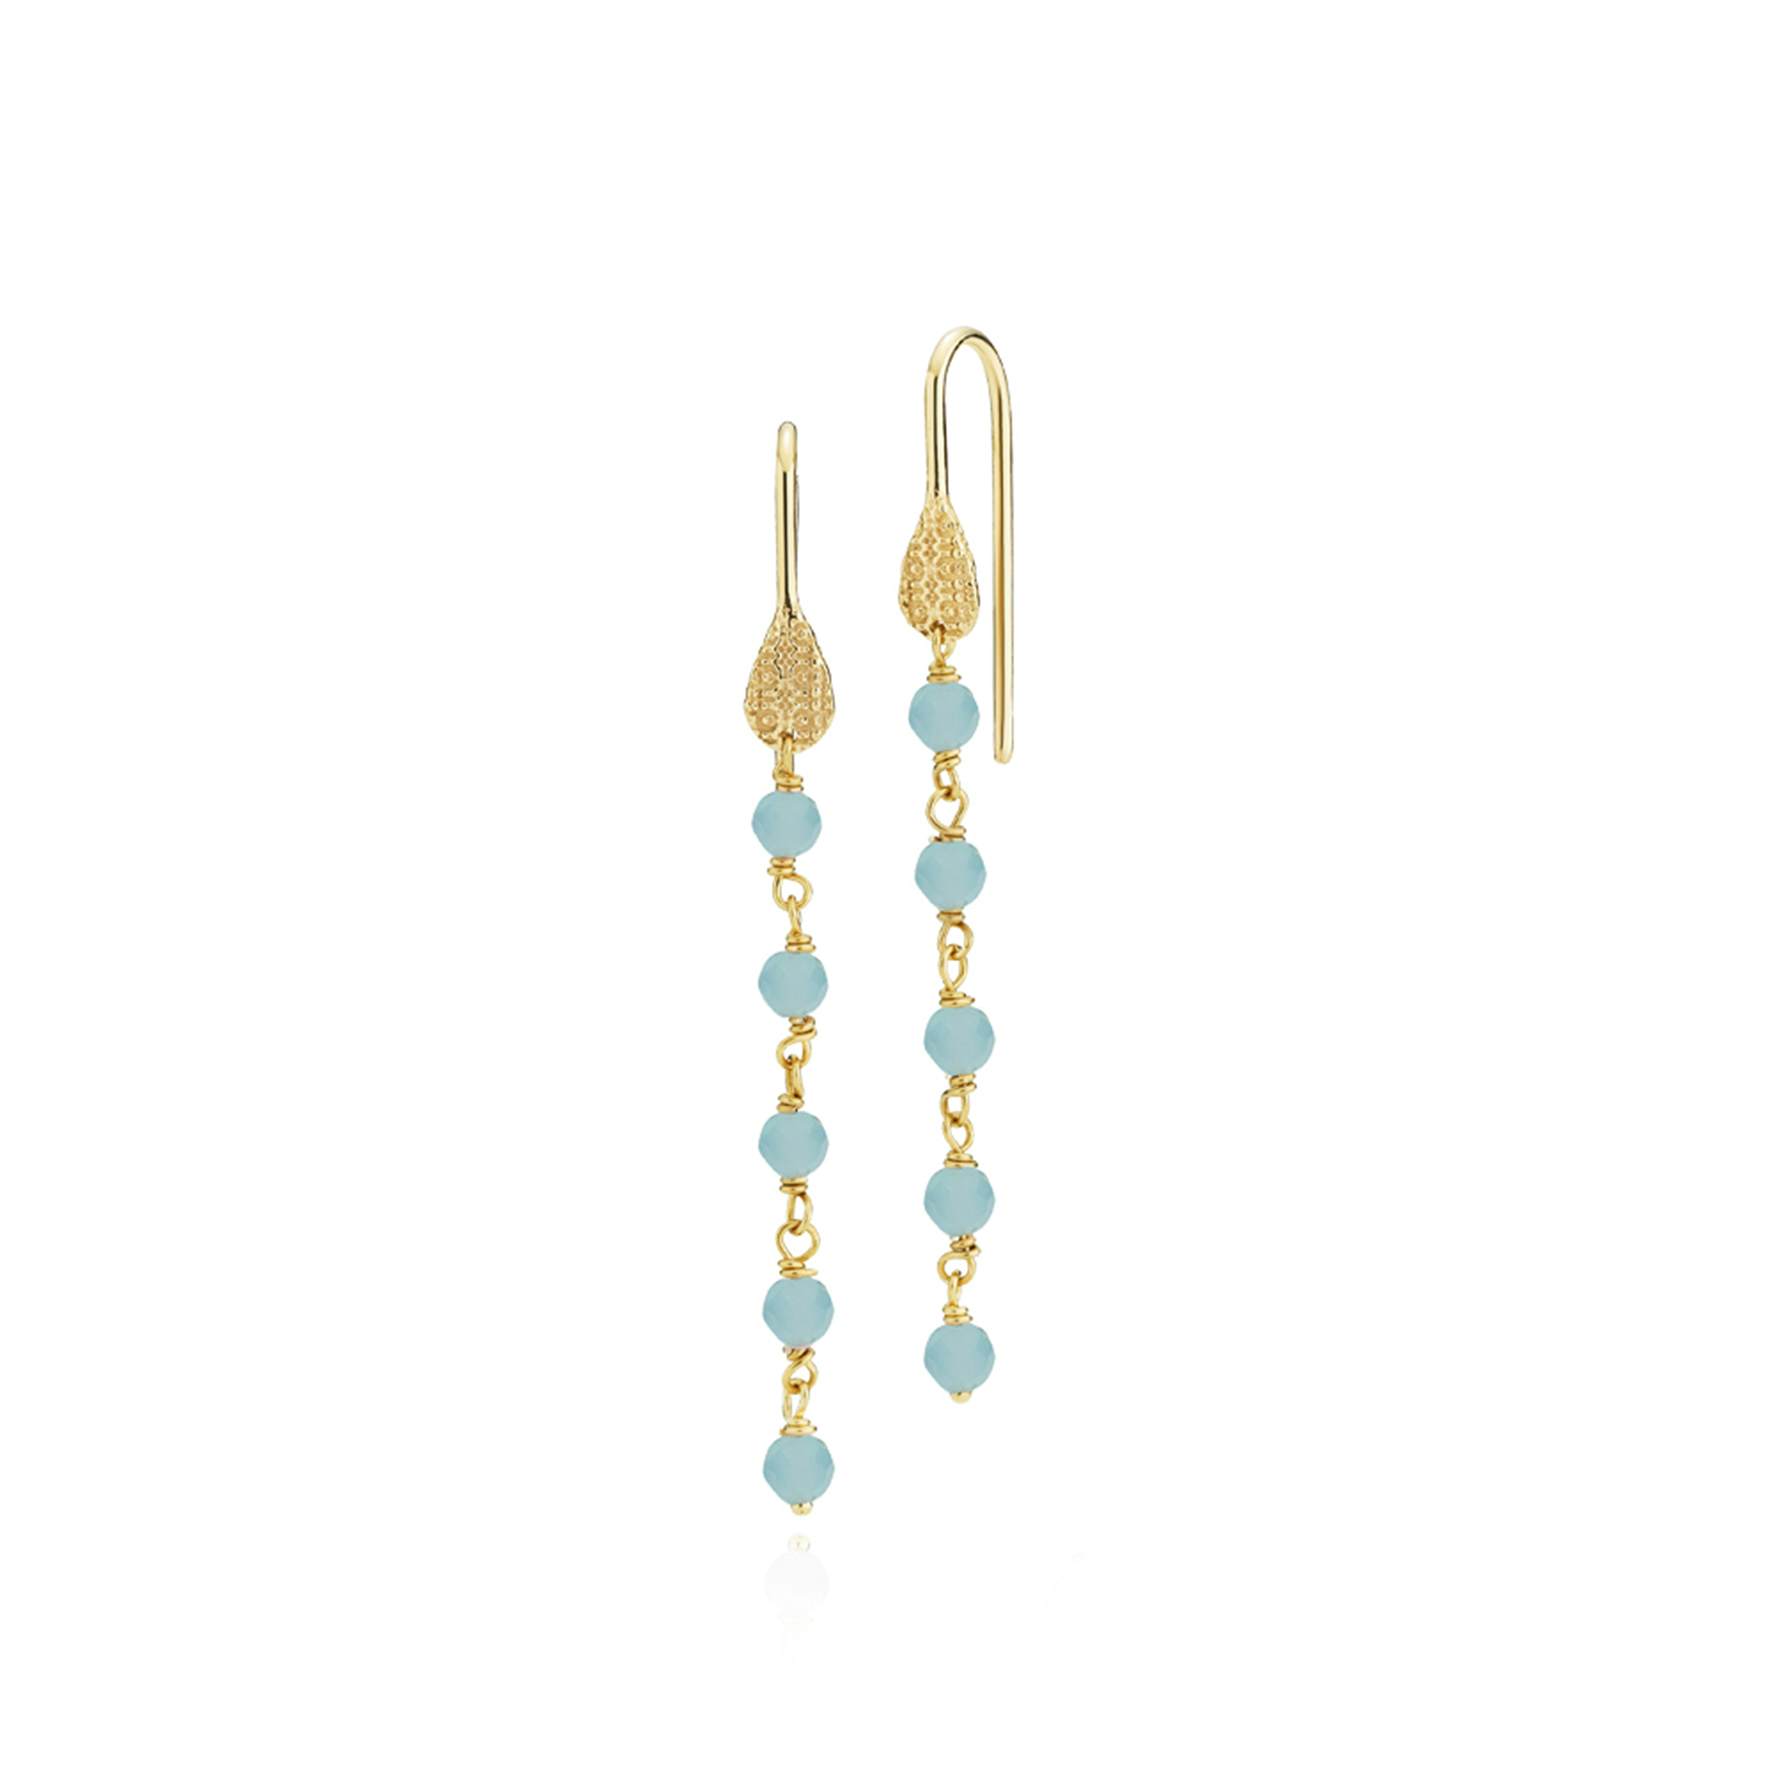 Boheme Long Blue Earrings von Sistie in Vergoldet-Silber Sterling 925